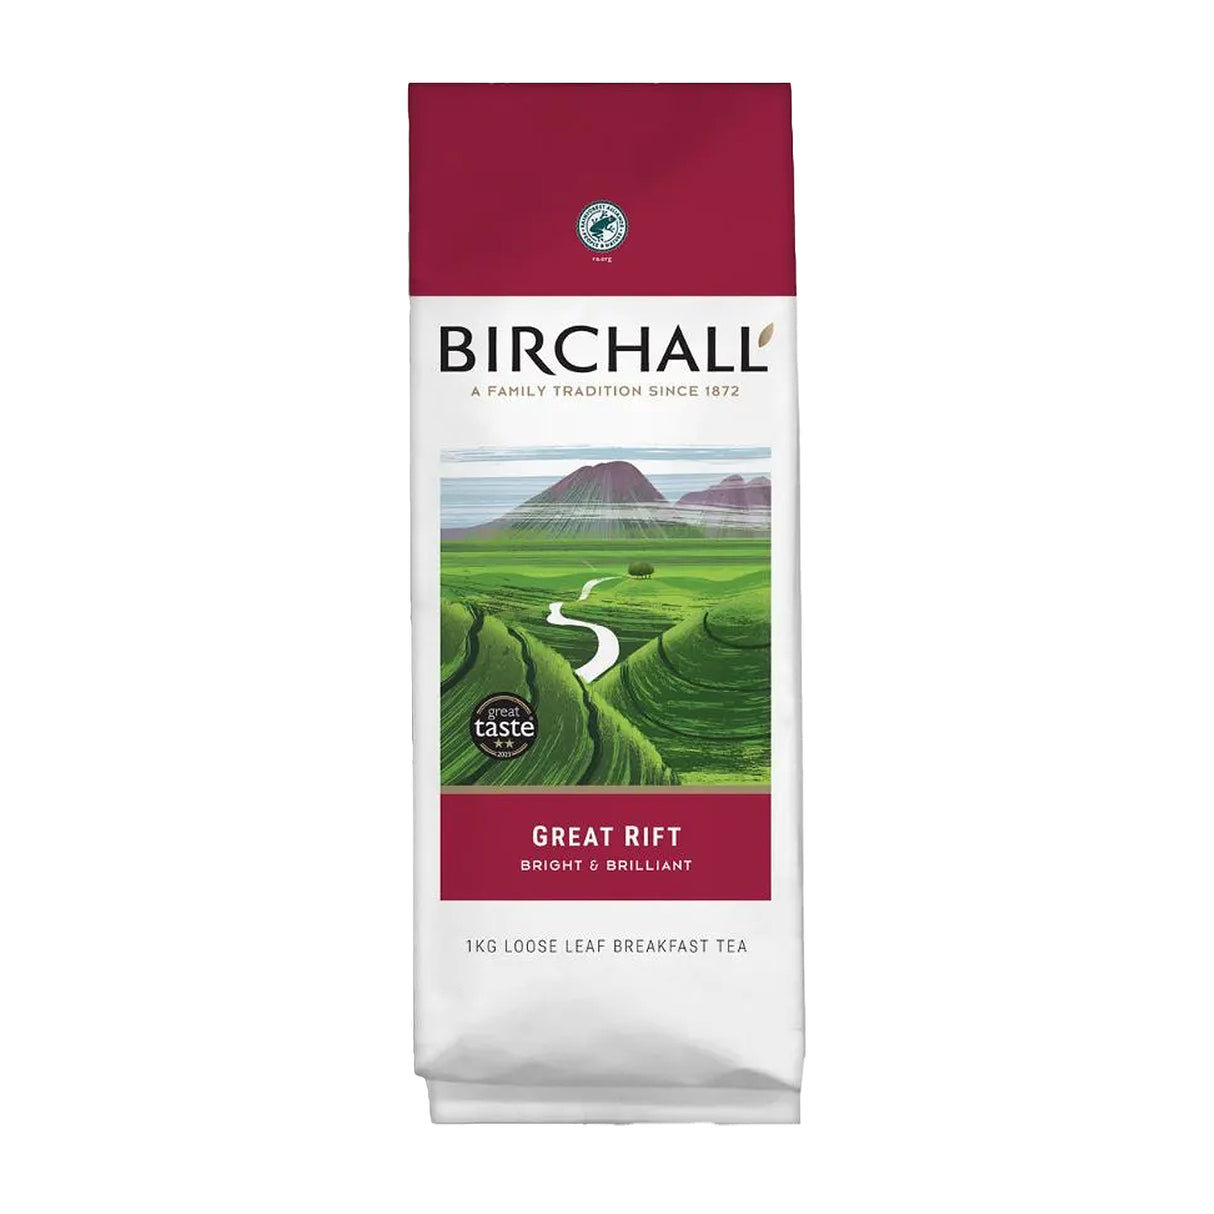 Birchall Great Rift Breakfast Tea Loose Leaf Tea 1kg